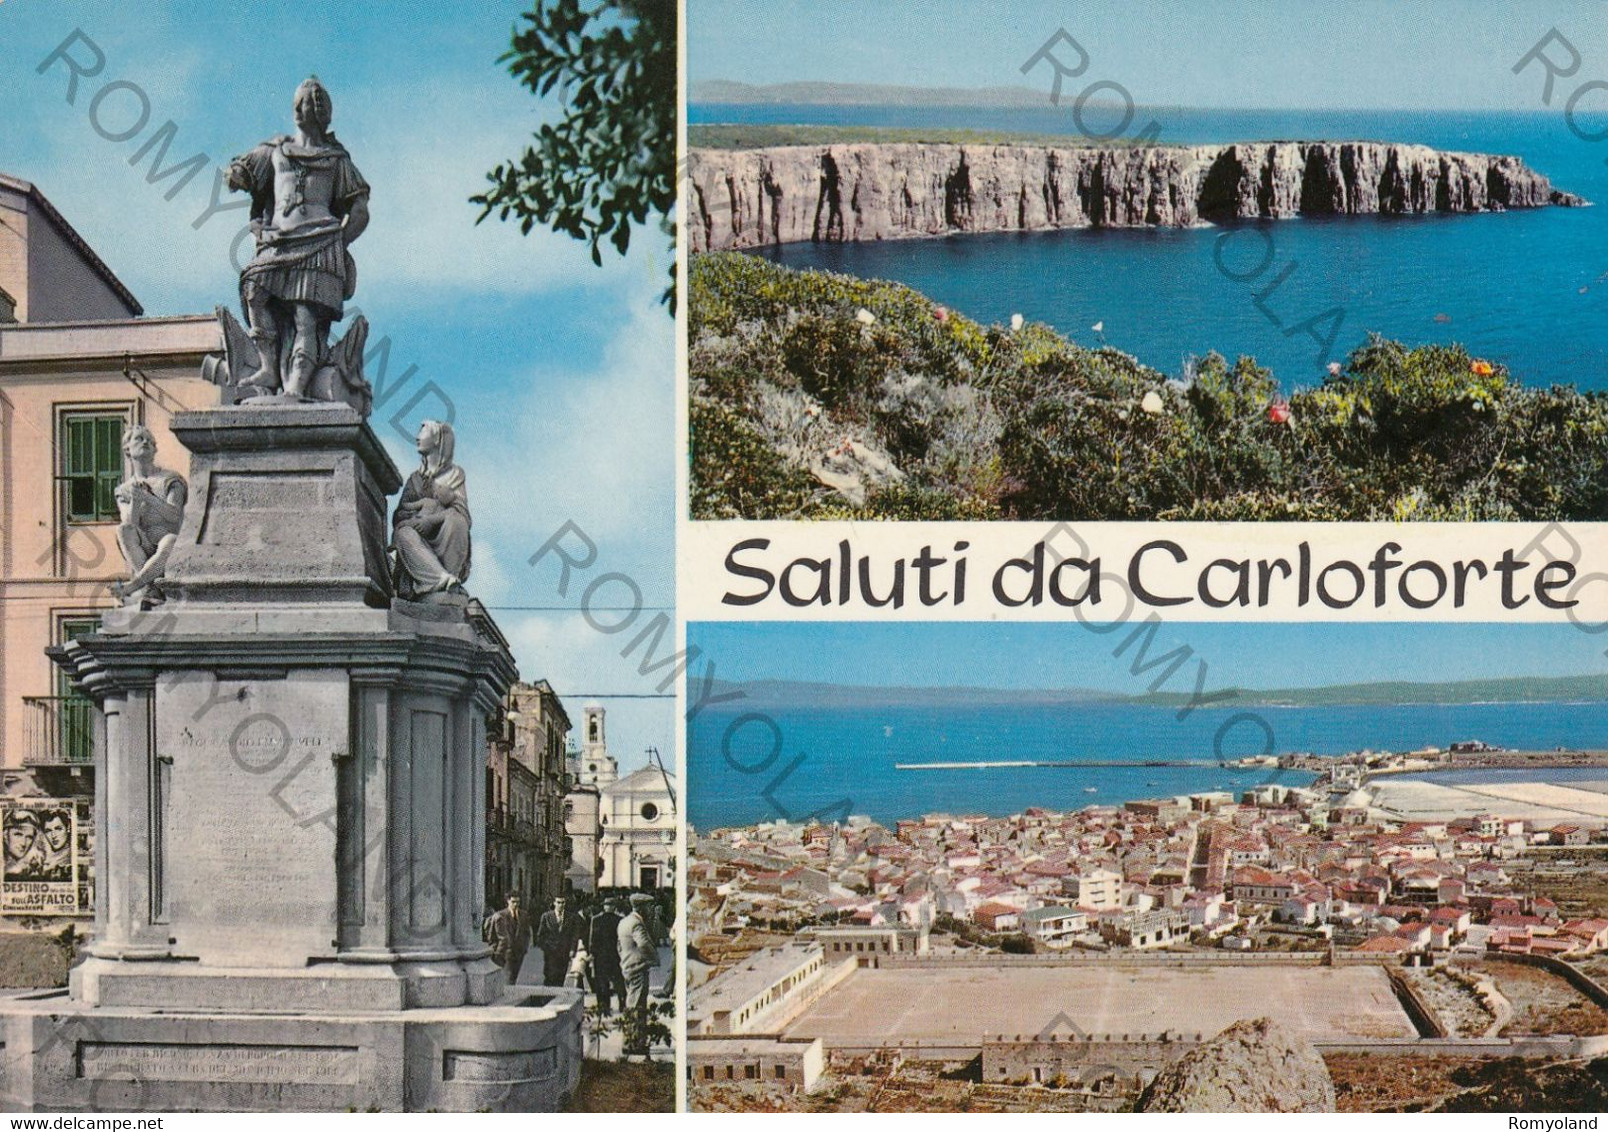 CARTOLINA  CARLOFORTE,CARBONIA-IGLESIAS,SALUTI,BELLA ITALIA,STORIA,CULTURA,RELIGIONE,MEMORIA,IMPERO,NON VIAGGIATA 1983 - Carbonia